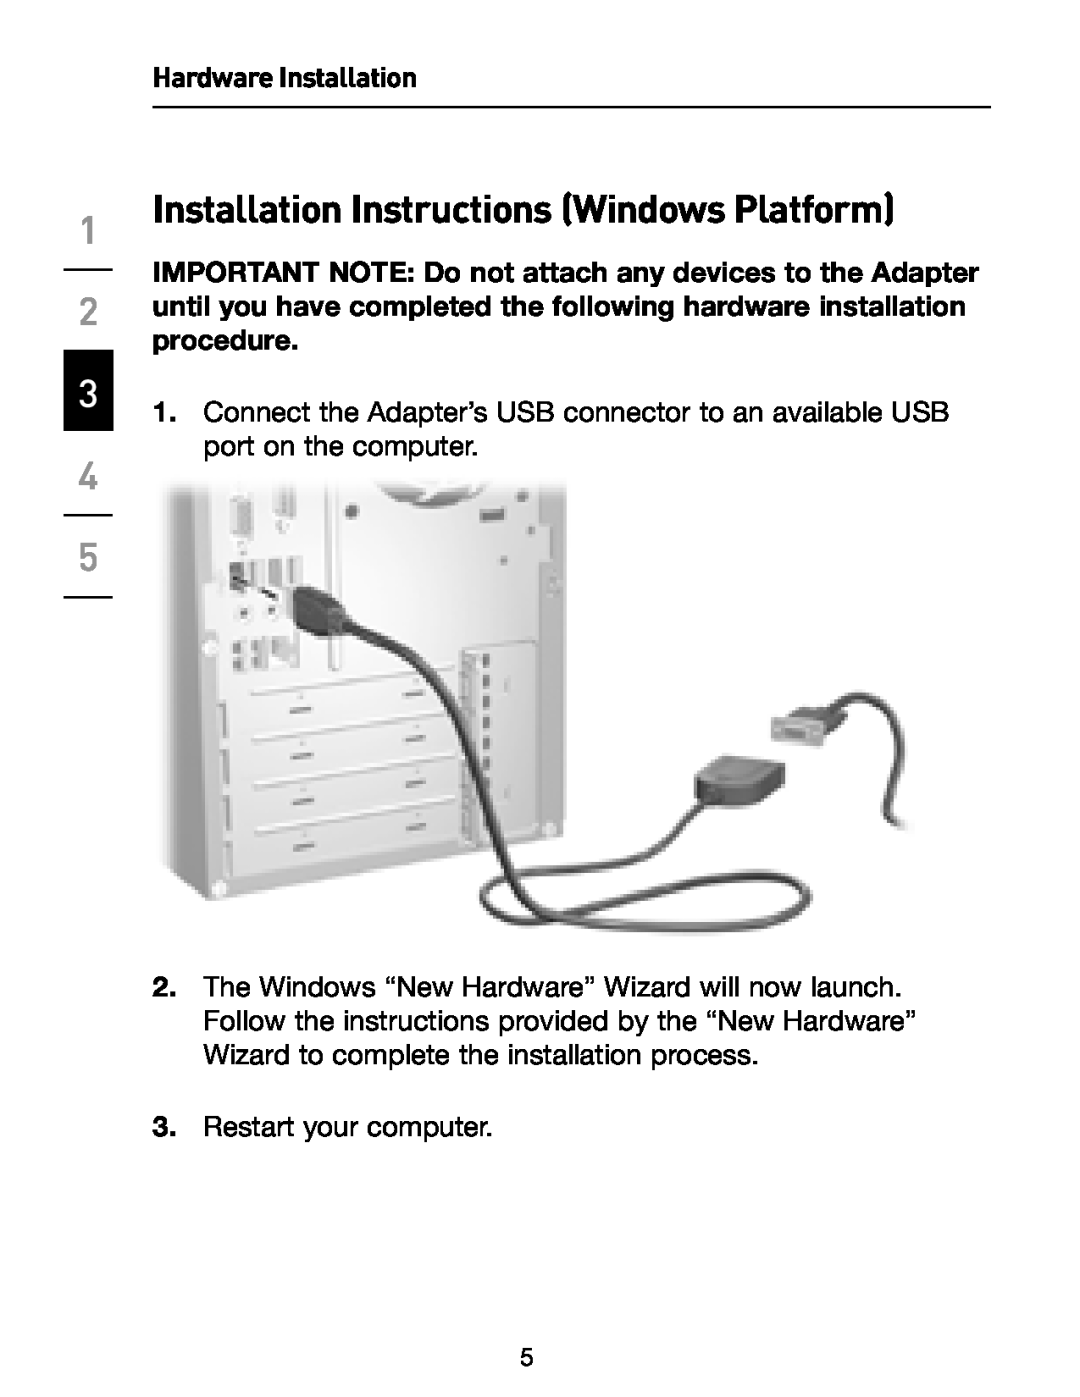 Belkin F5U257 user manual Installation Instructions Windows Platform, Hardware Installation 